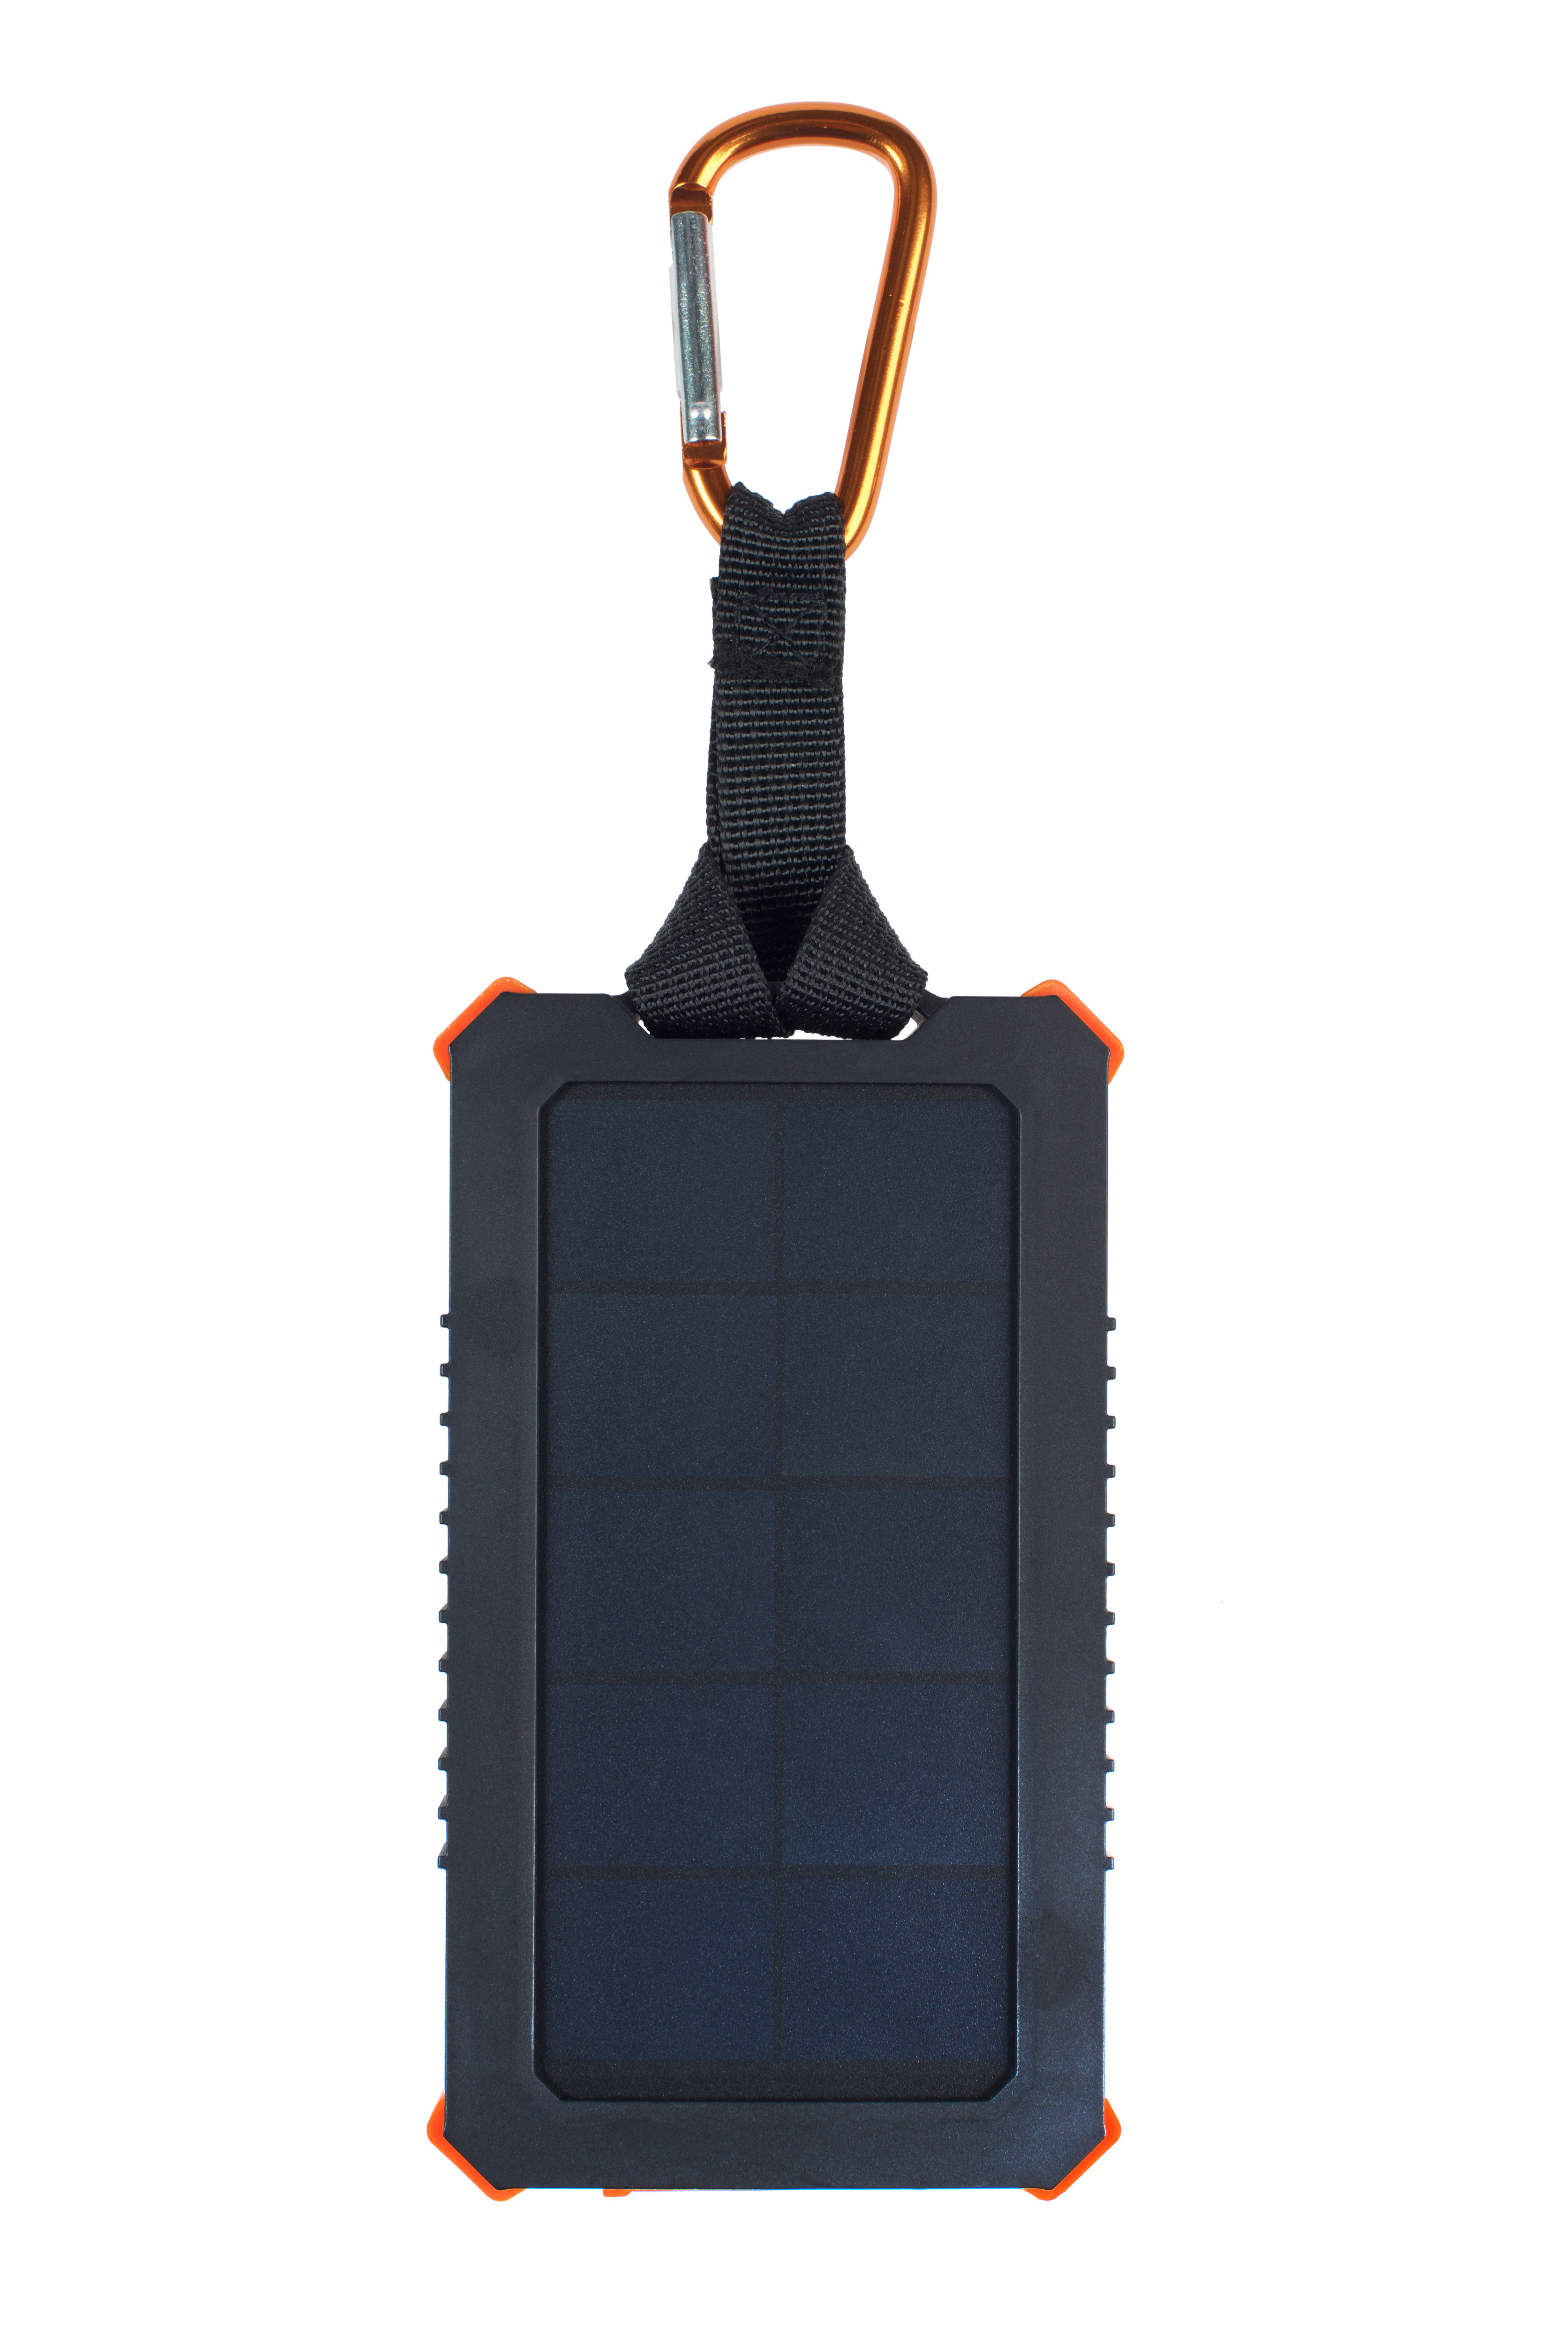 XTORM Xtreme Solar 5000 Schwarz,Orange mAh Series Powerbank